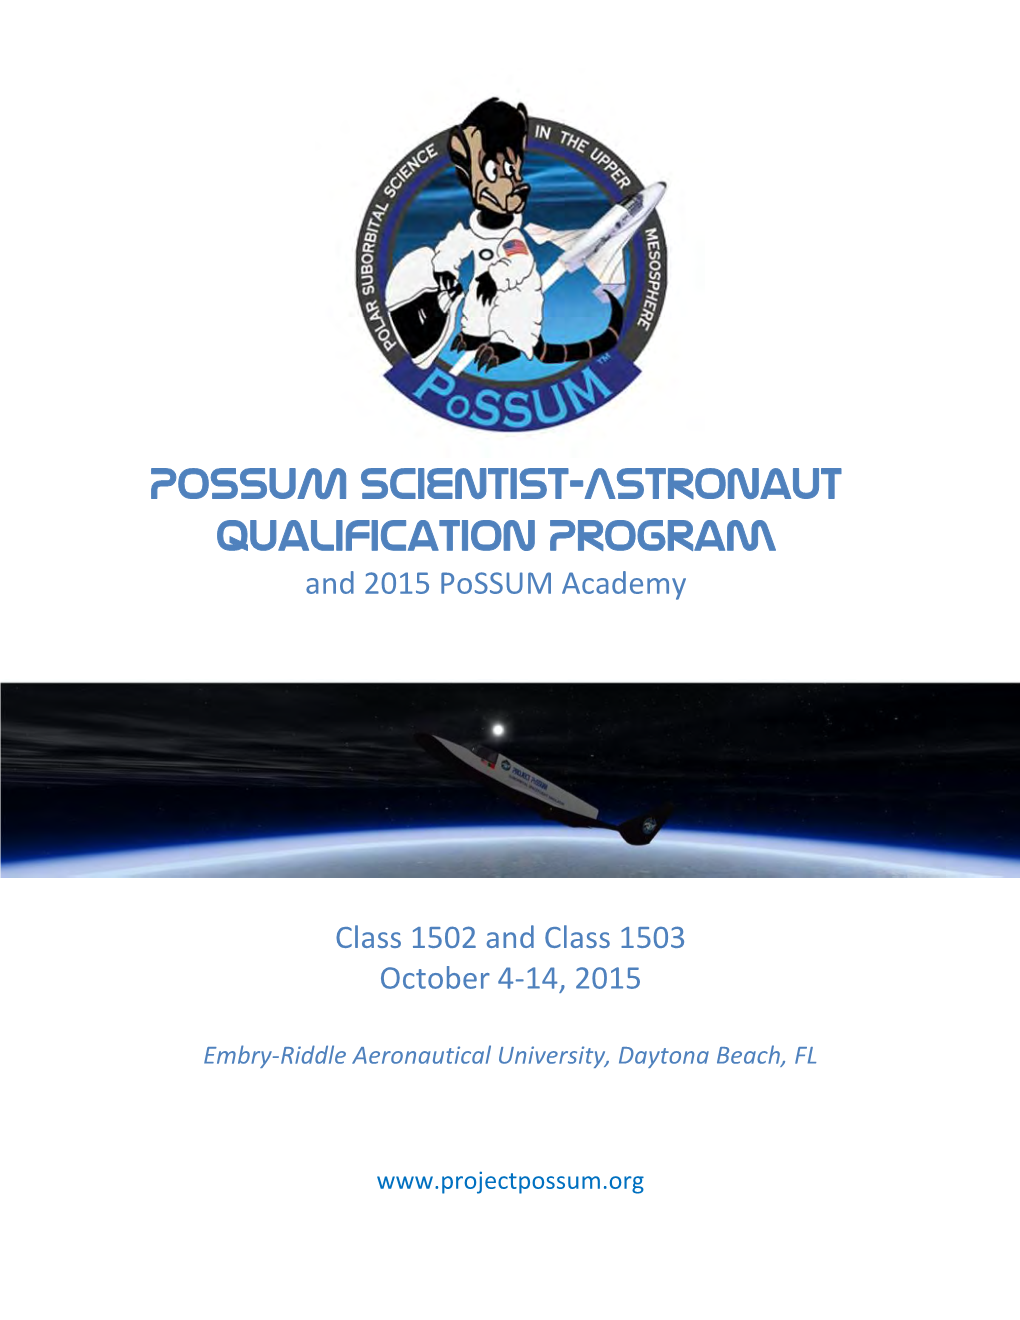 Possum Scientist-Astronaut Qualification Program and 2015 Possum Academy